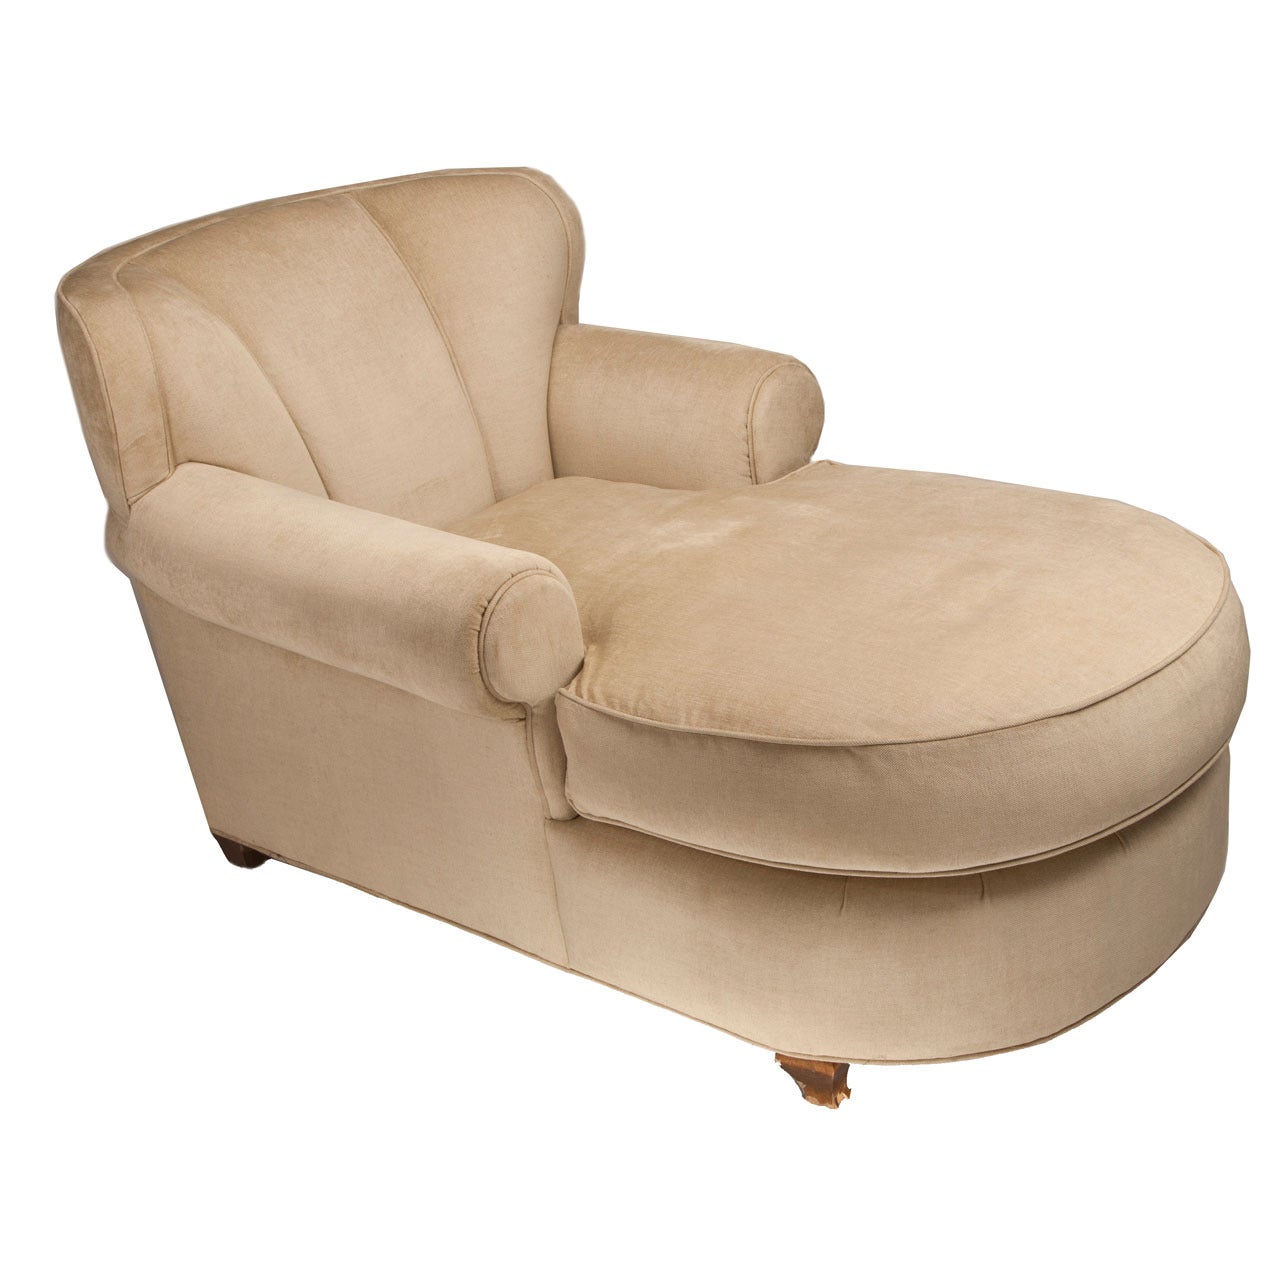 Grange Furniture Art Deco Style Chaise Longue